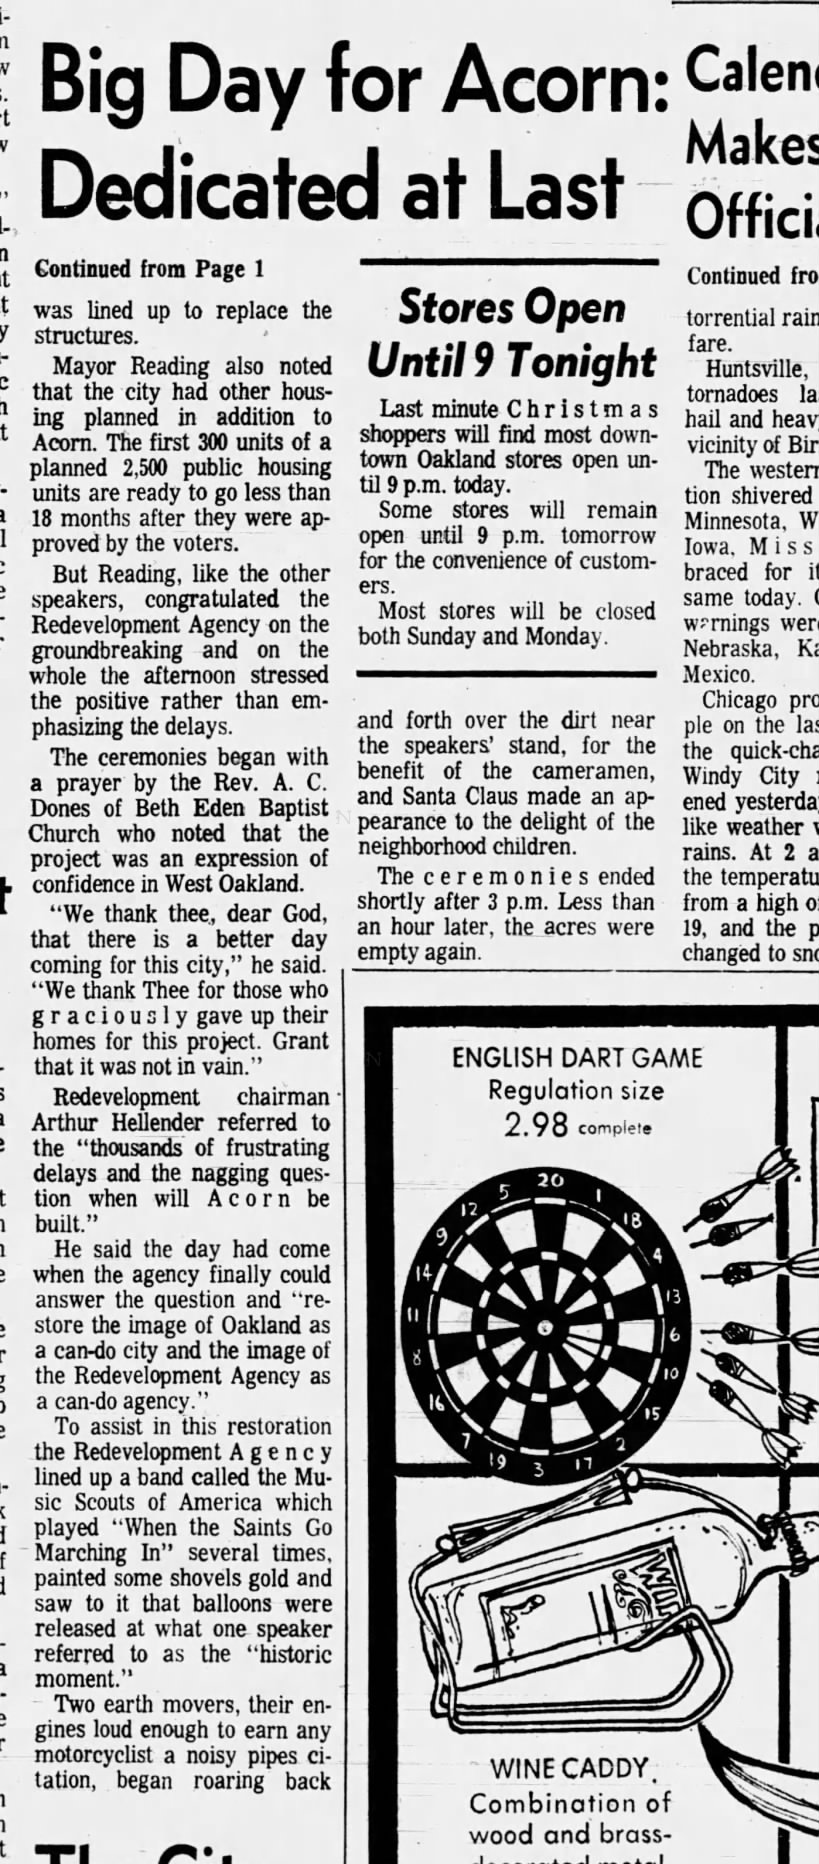 Big Day For Acorn - It's Dedicated - Oakland Tribune December 22, 1967